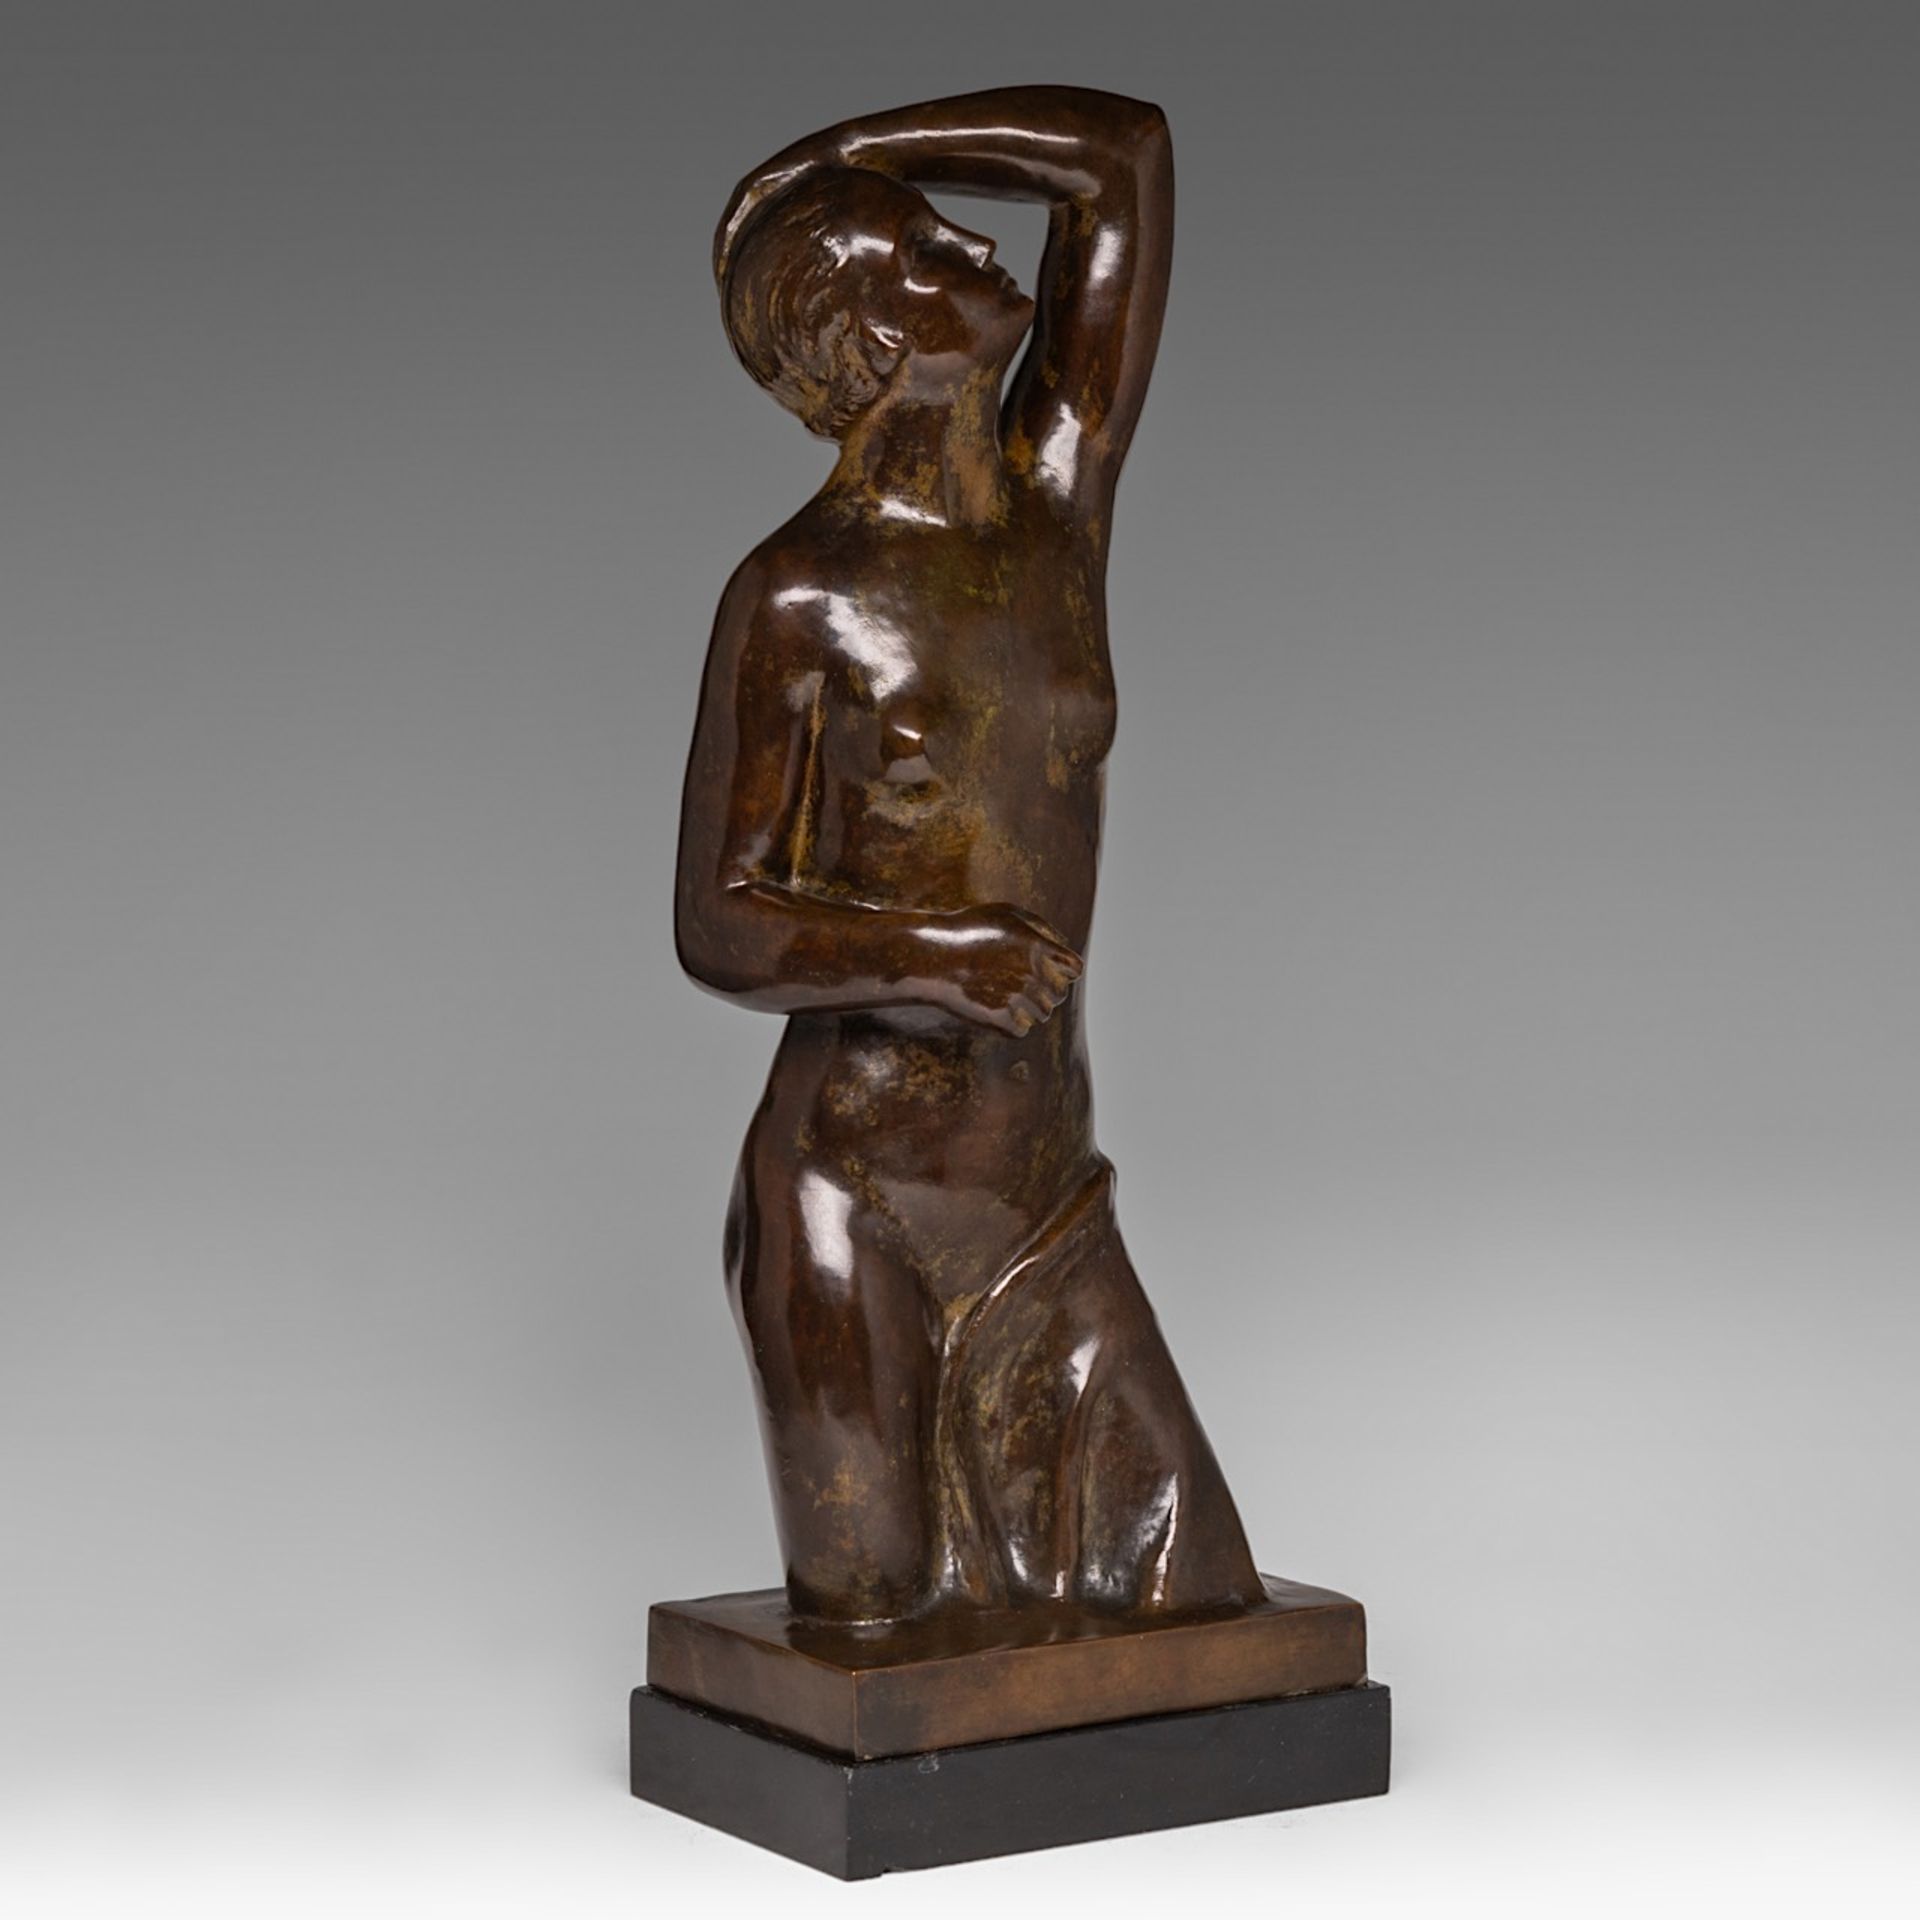 Leon Sarteel (1882-1942), Baigneuse, patinated bronze, casted by G. Vindevogel, Zwijnaarde, H 58 cm - Bild 2 aus 7